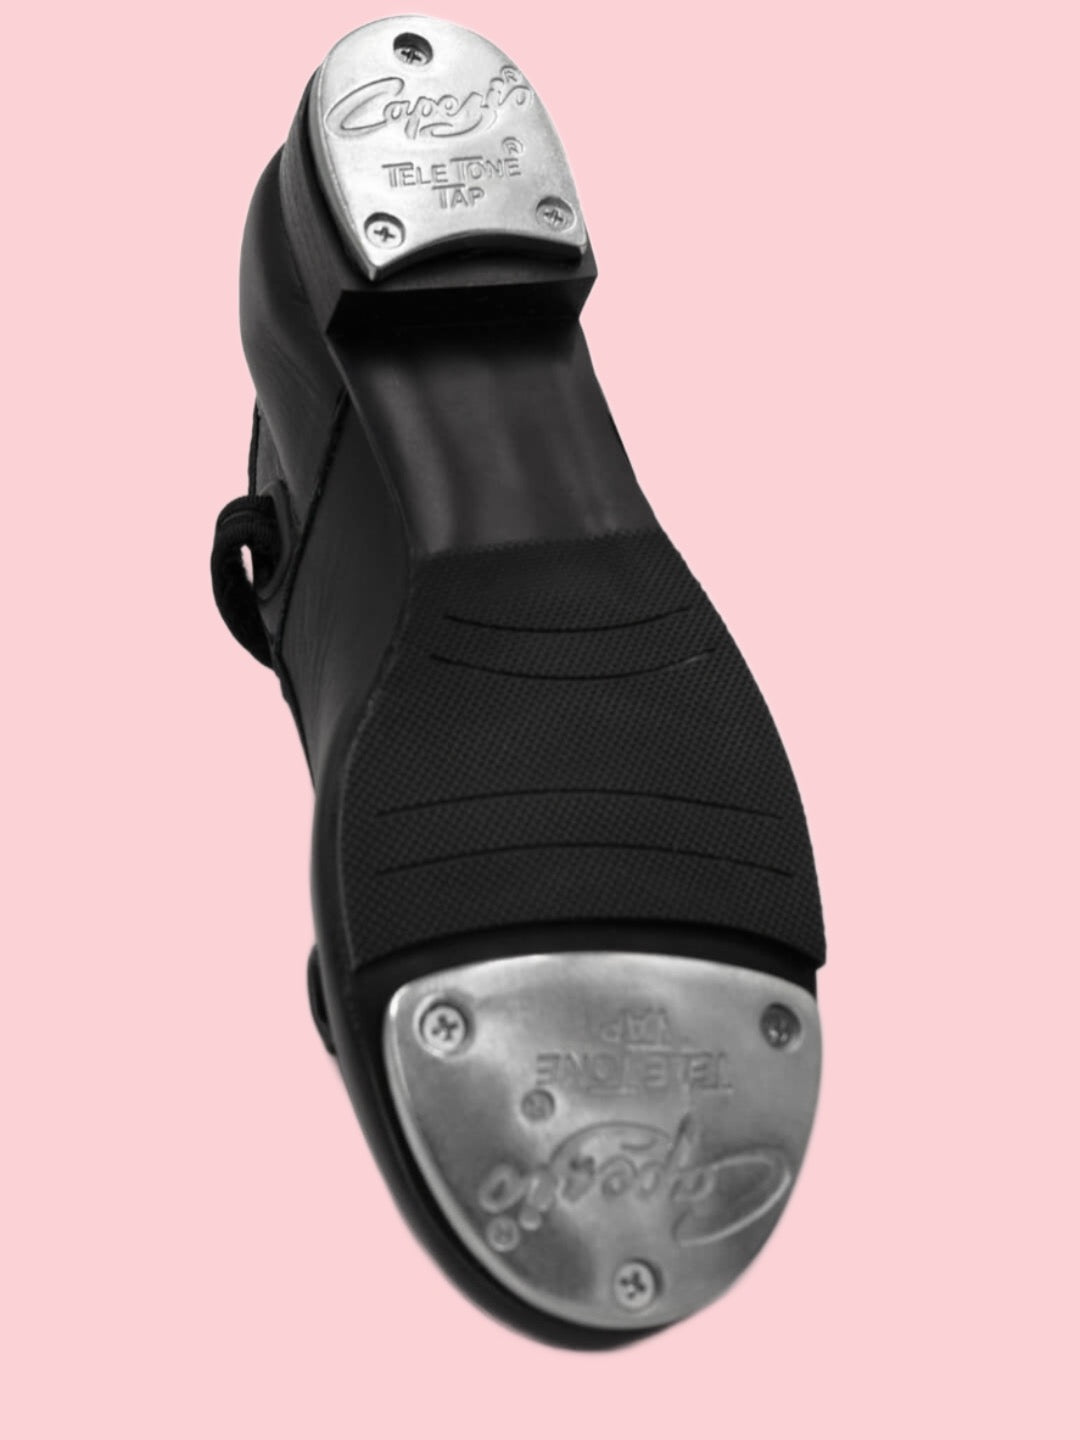 Capezio Mary Jane Leather Tap Shoe